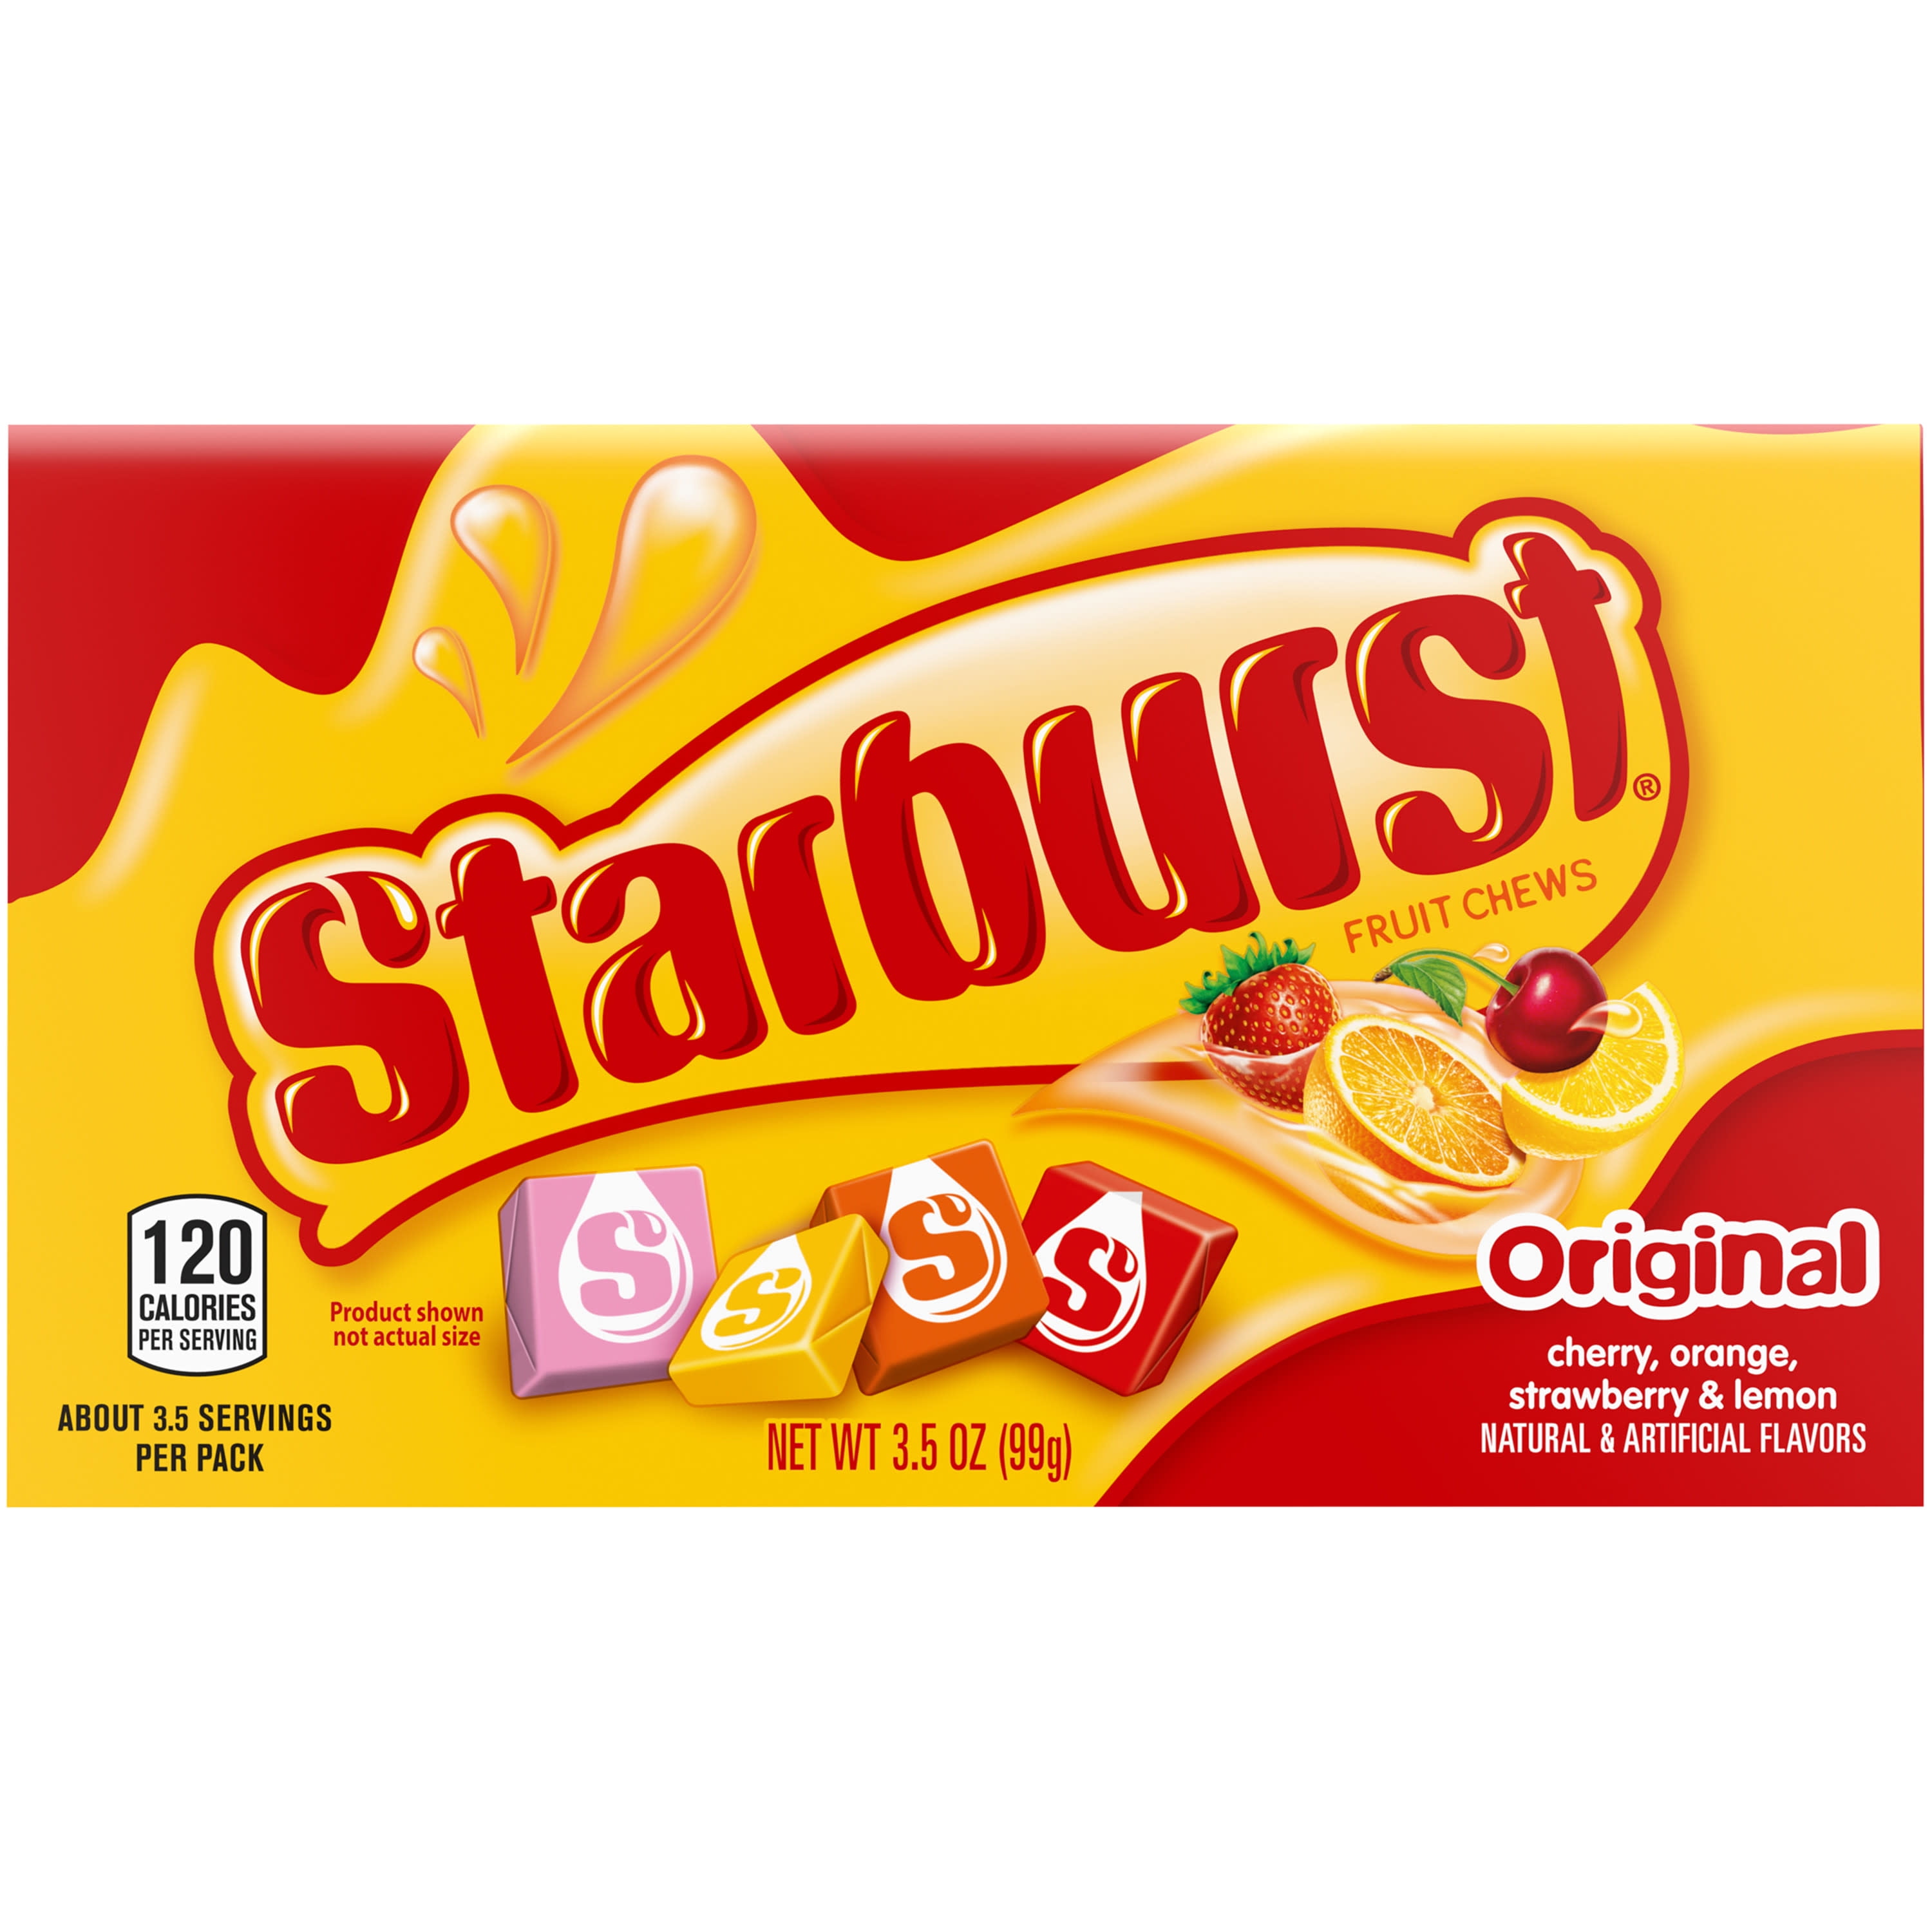 Starburst Original Fruit Chews Gummy Candy Theater Box - 3.5 oz Box